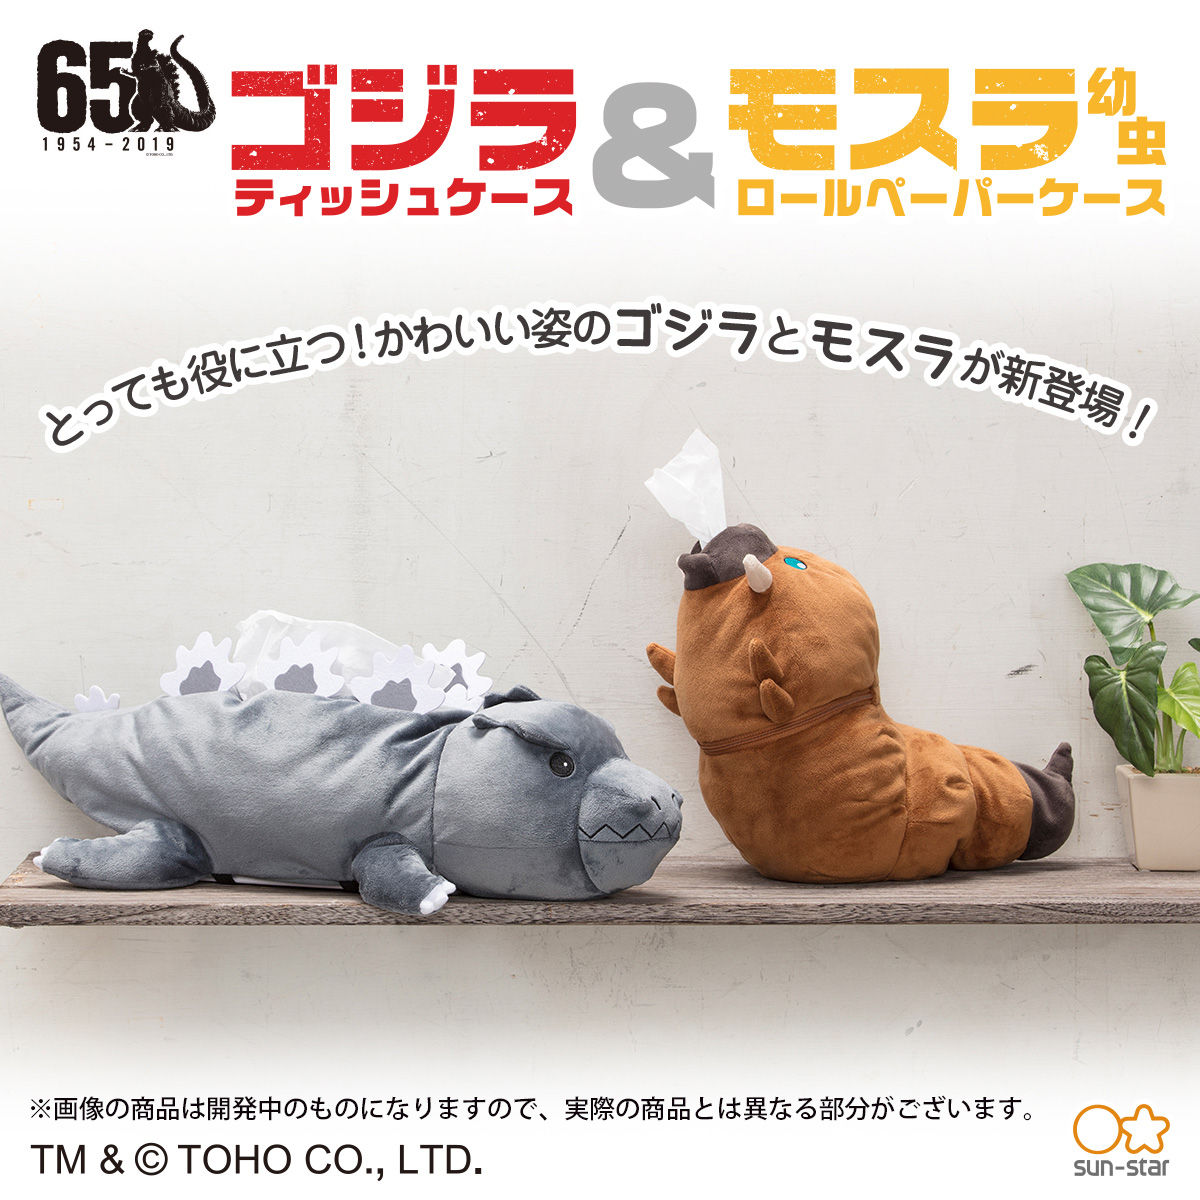 Godzilla store japan Heisei Godzilla BOX Tissue Case Limited JAPAN 